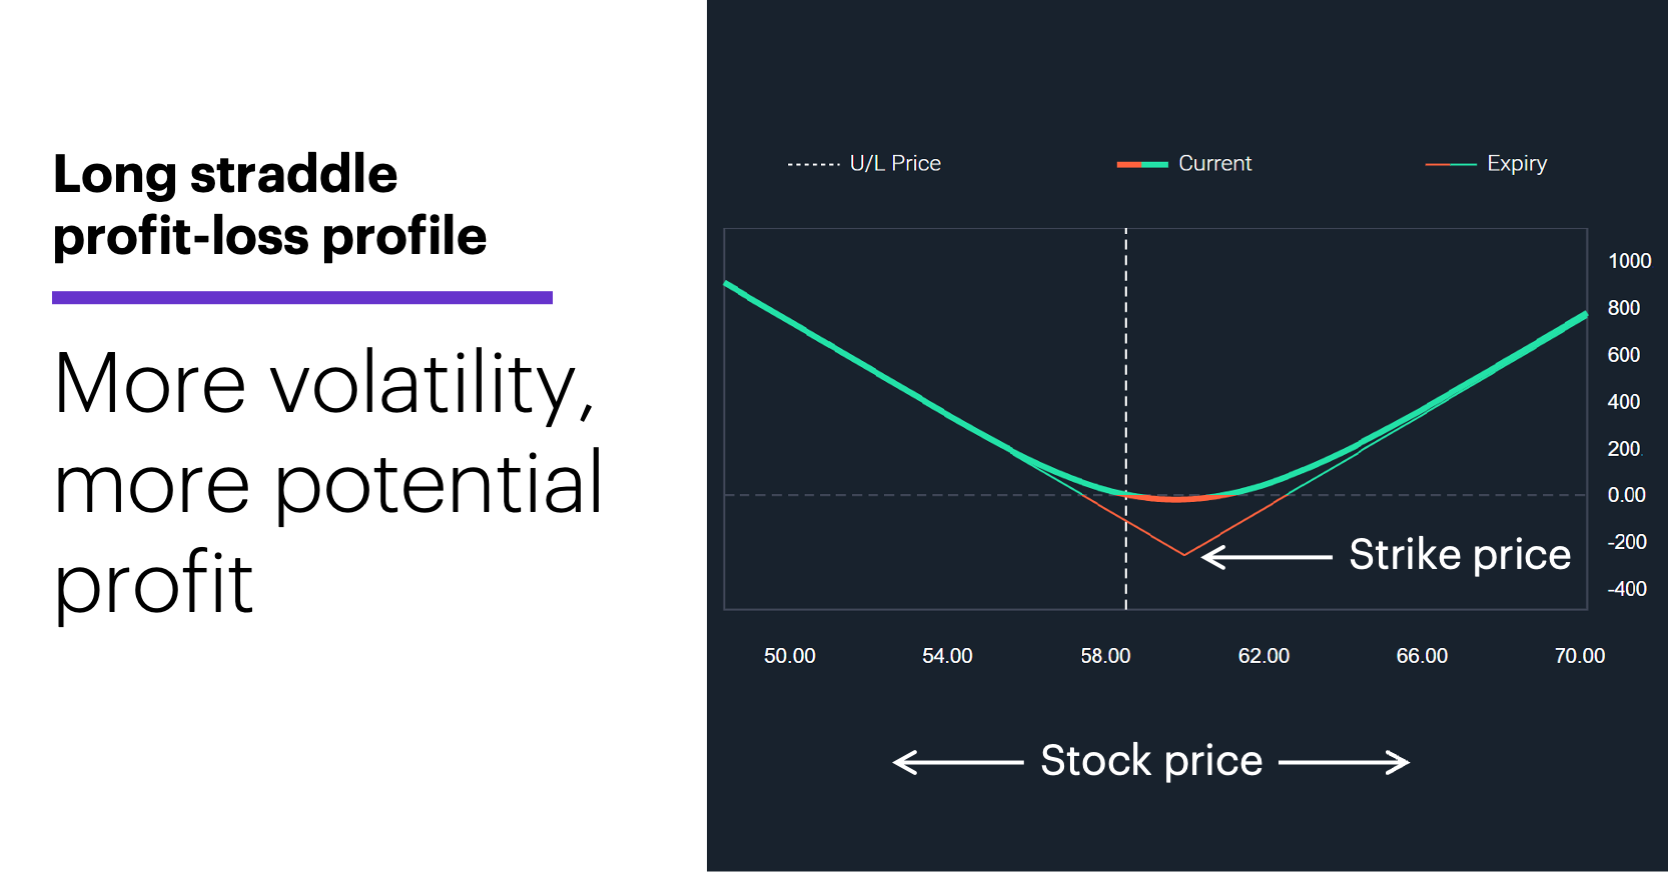 Chart 2: Long straddle profit-loss profile. Options straddle risk-reward profile. More volatility, more potential profit.